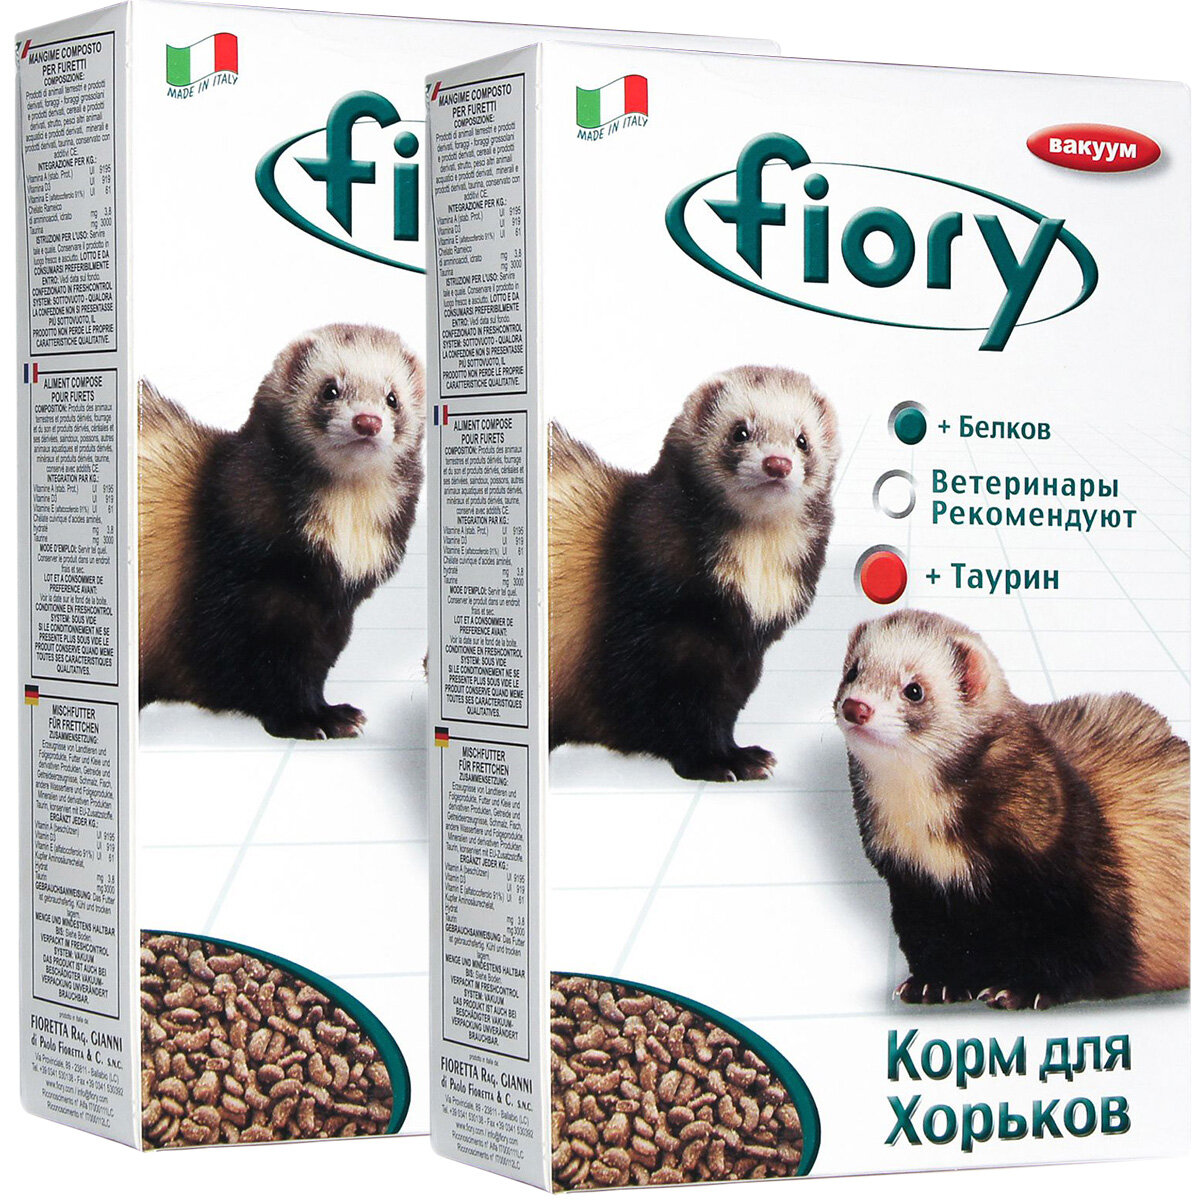 FIORY FURBY — Фиори корм для хорьков (650 гр х 2 шт)